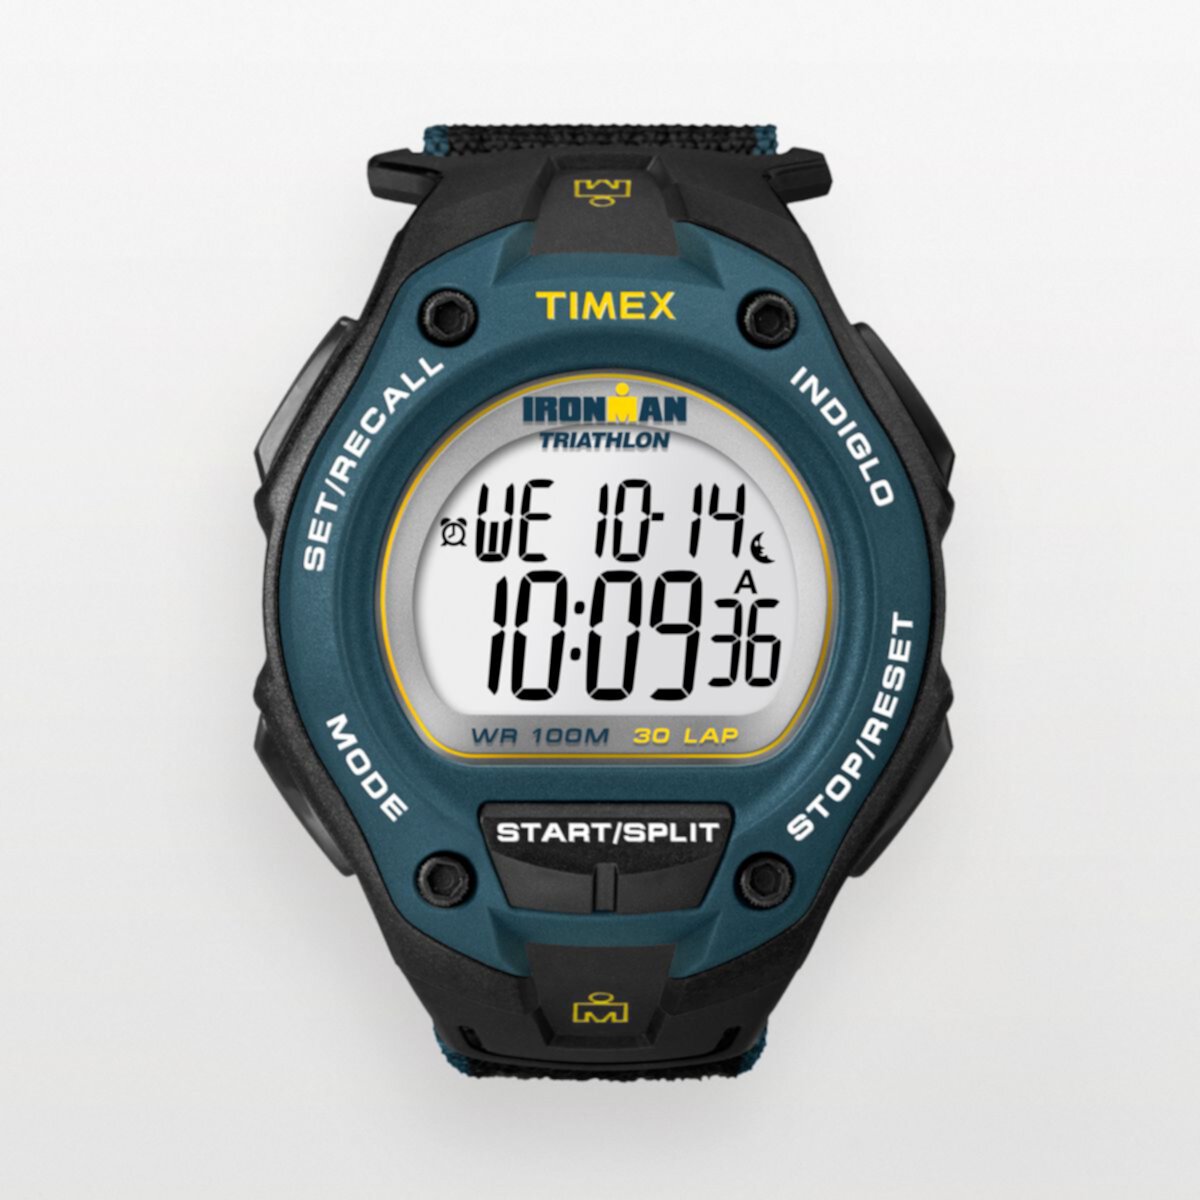 Мужские часы Timex® Ironman Triathlon с цифровым хронографом, 30 кругов - T5K413KZ Timex